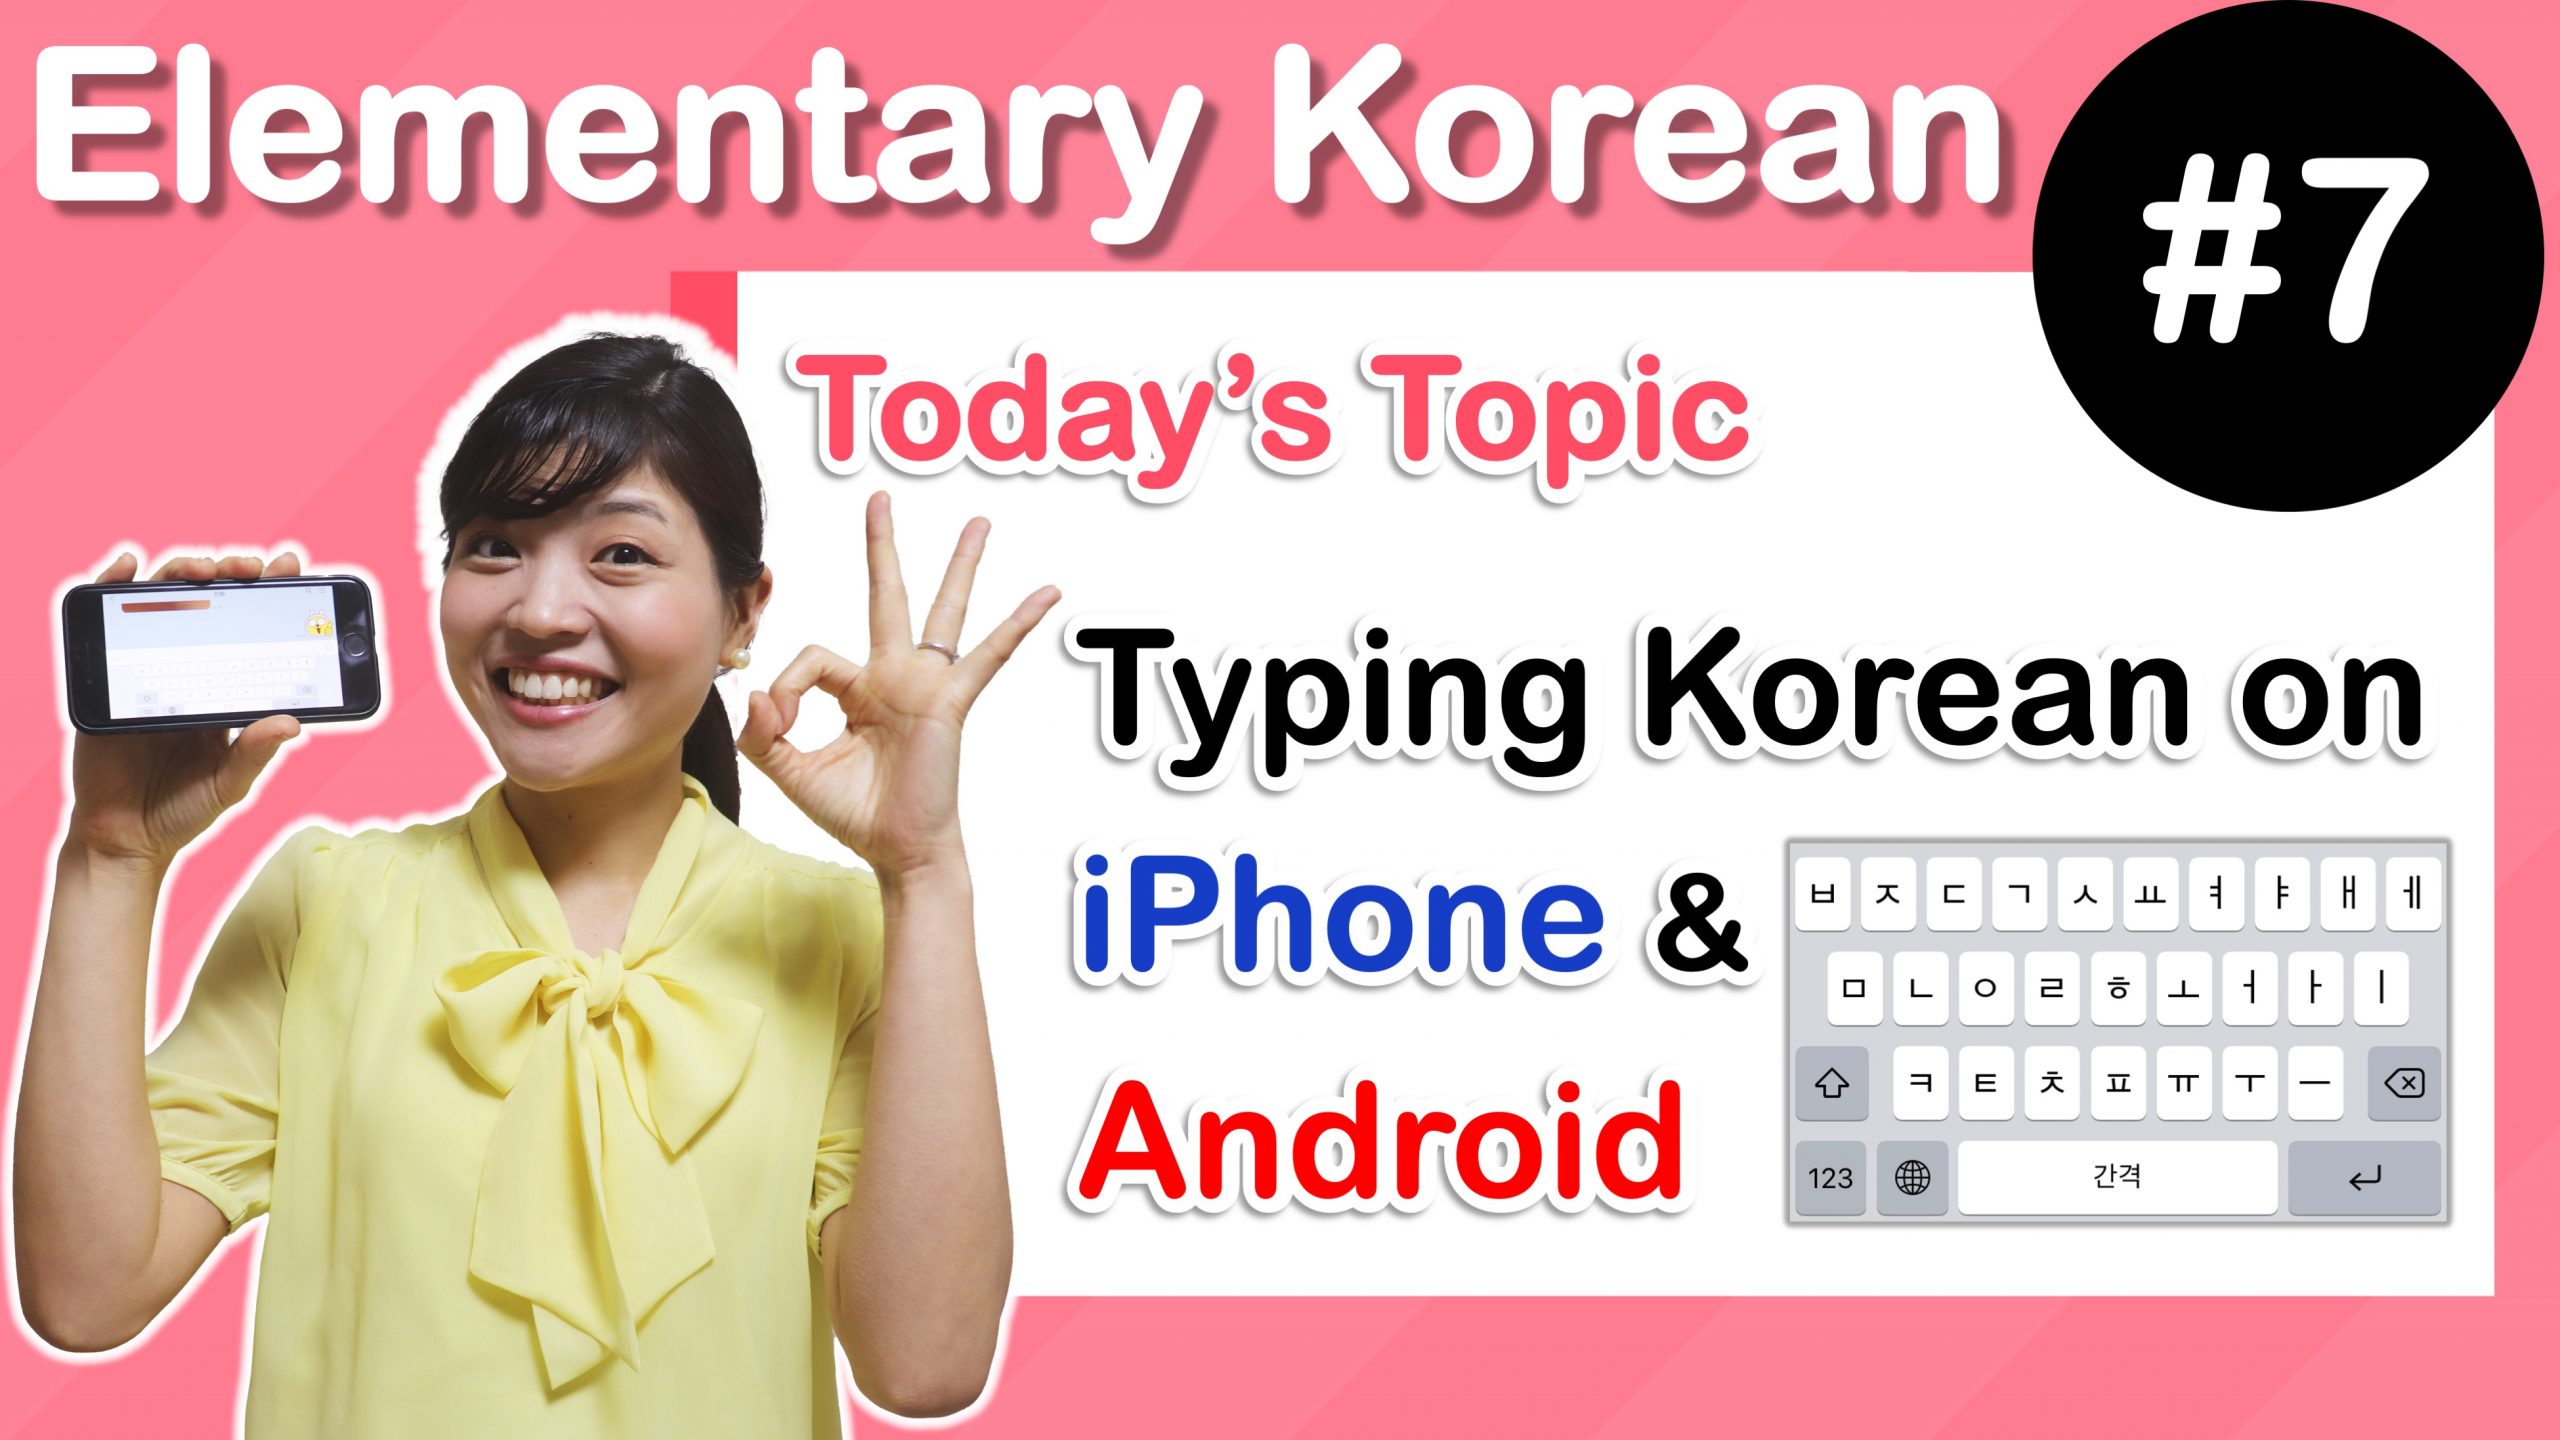 korean keyboard windows 7